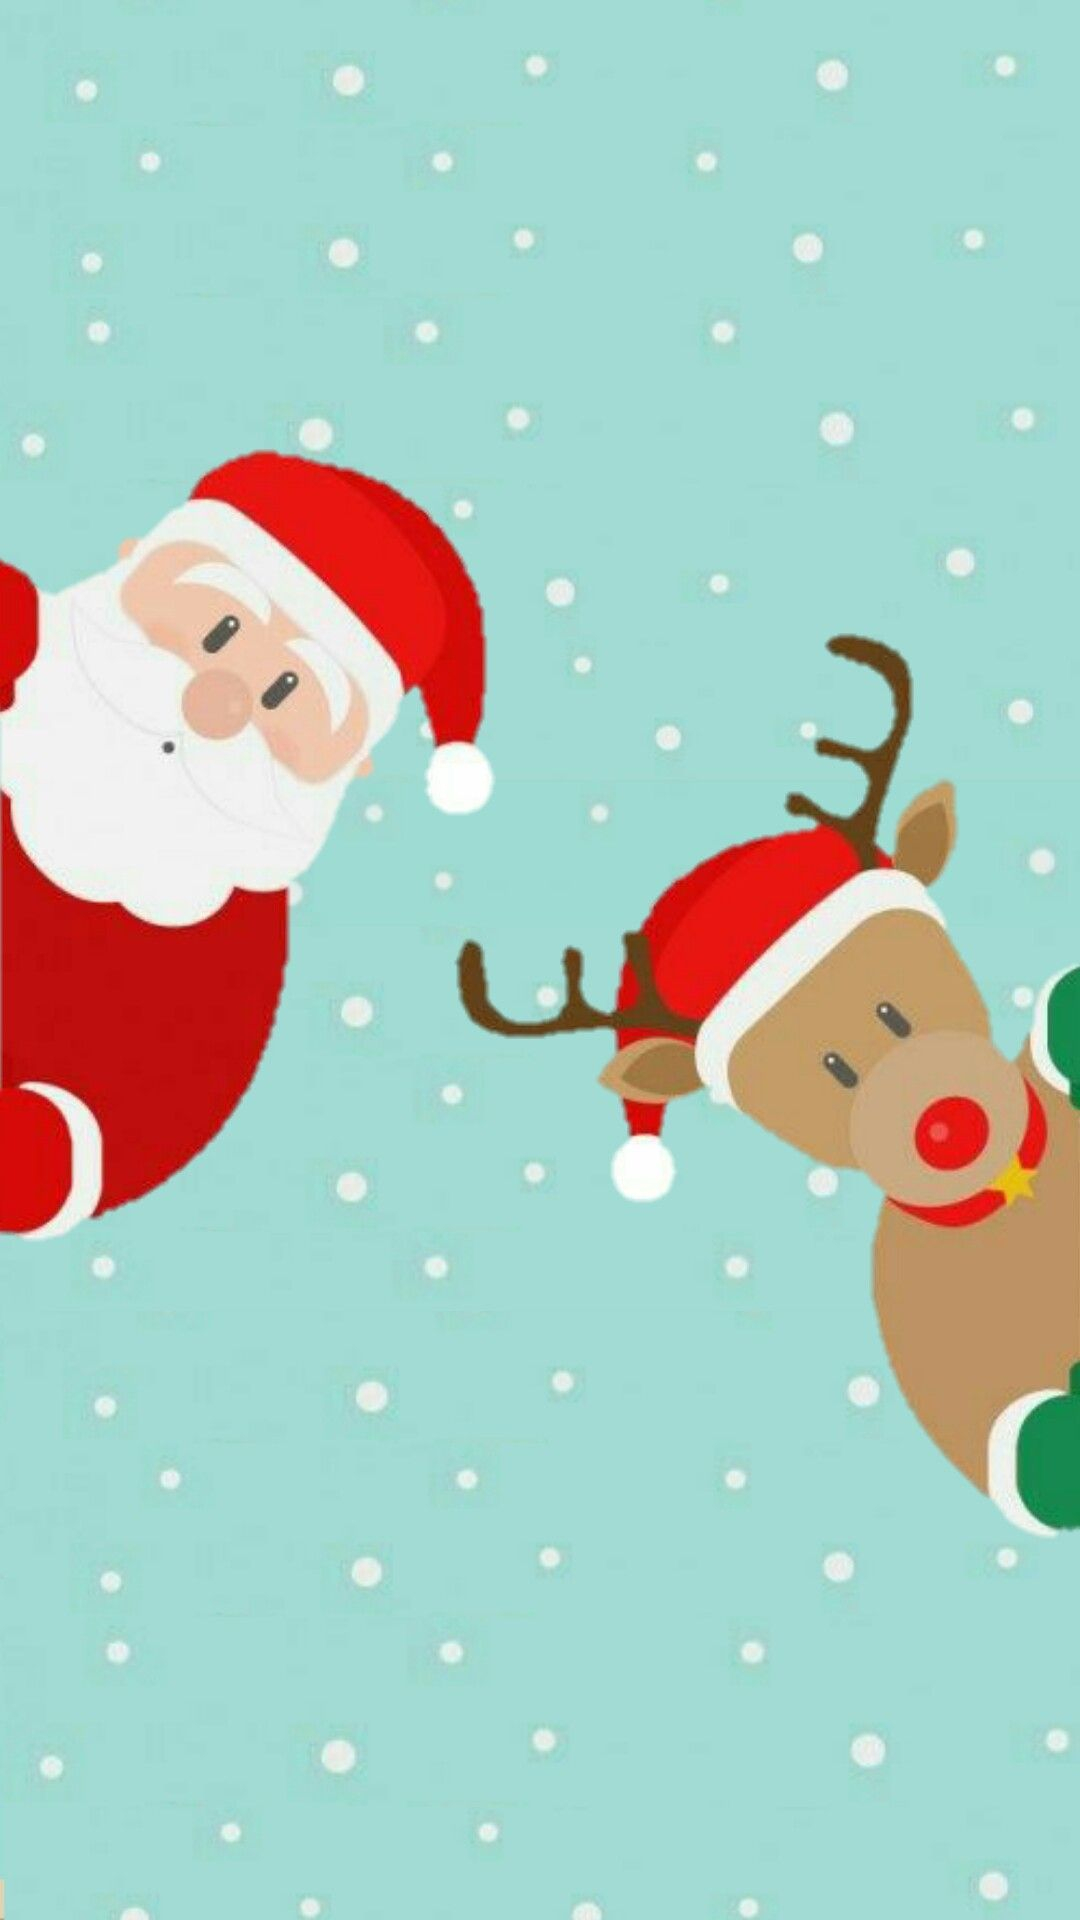 1080x1920 Santa Christmas Phone Wallpapers Top Free Santa Christmas Phone Backgrounds